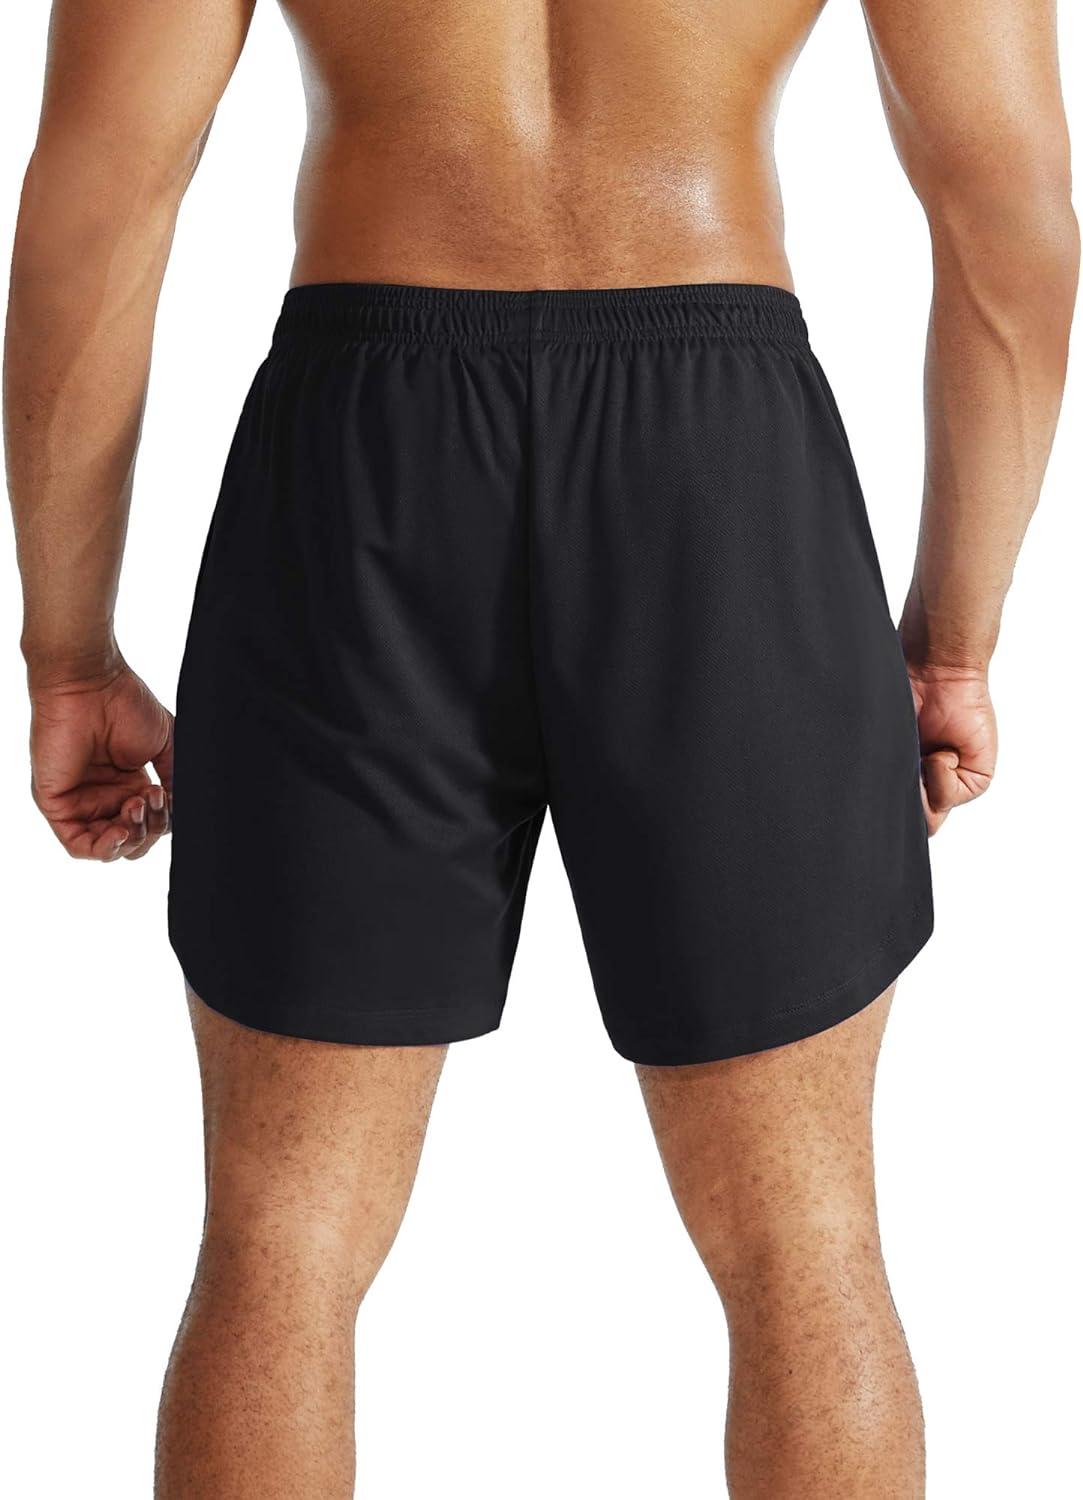 Enhance Your Workouts with Neleus Men's Compression Shorts